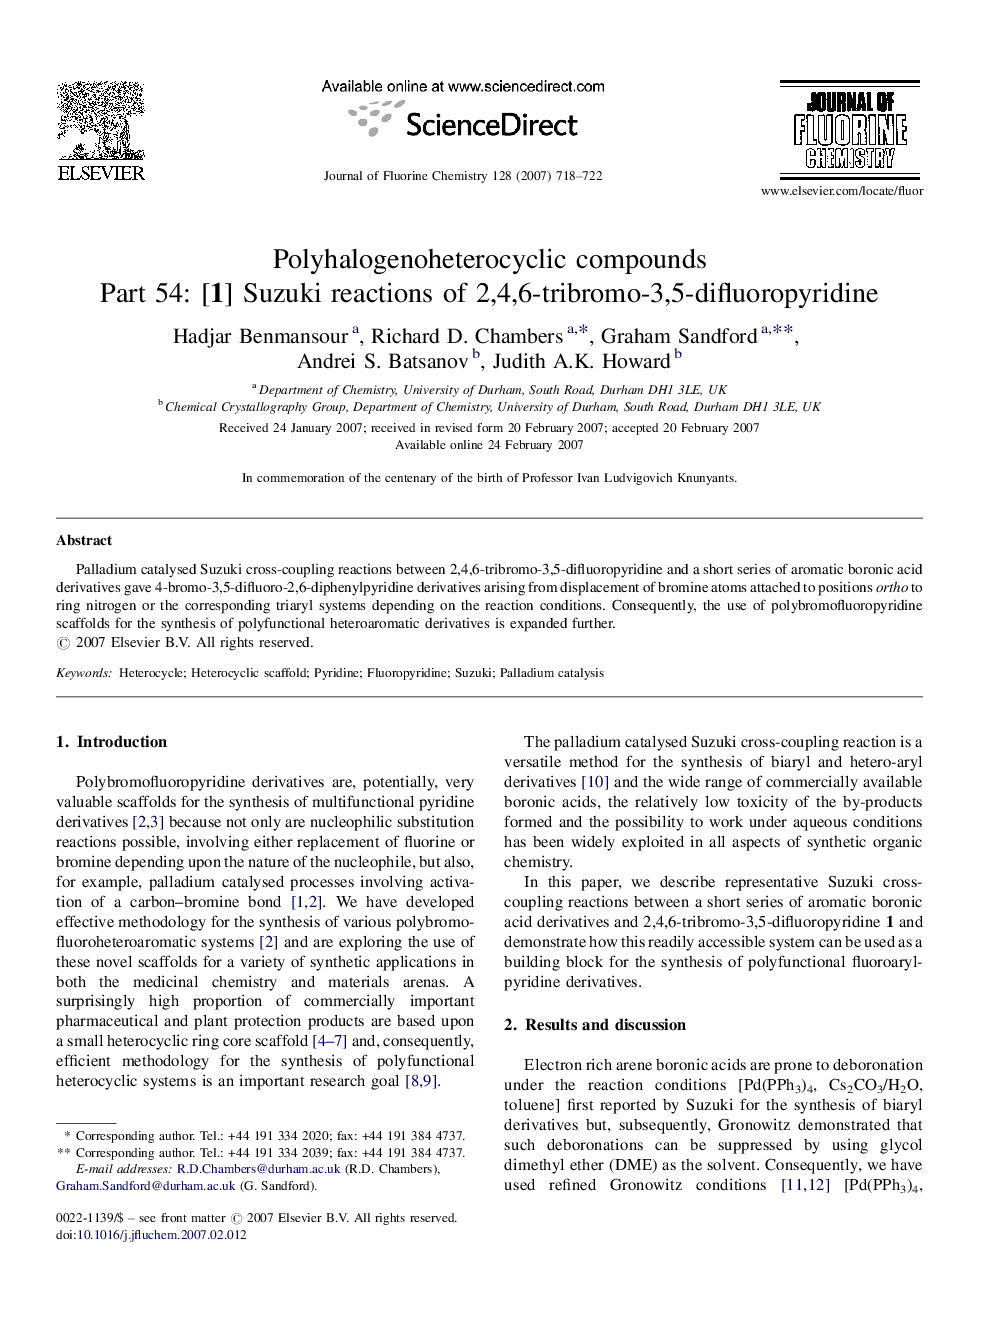 Polyhalogenoheterocyclic compounds: Part 54: [1] Suzuki reactions of 2,4,6-tribromo-3,5-difluoropyridine